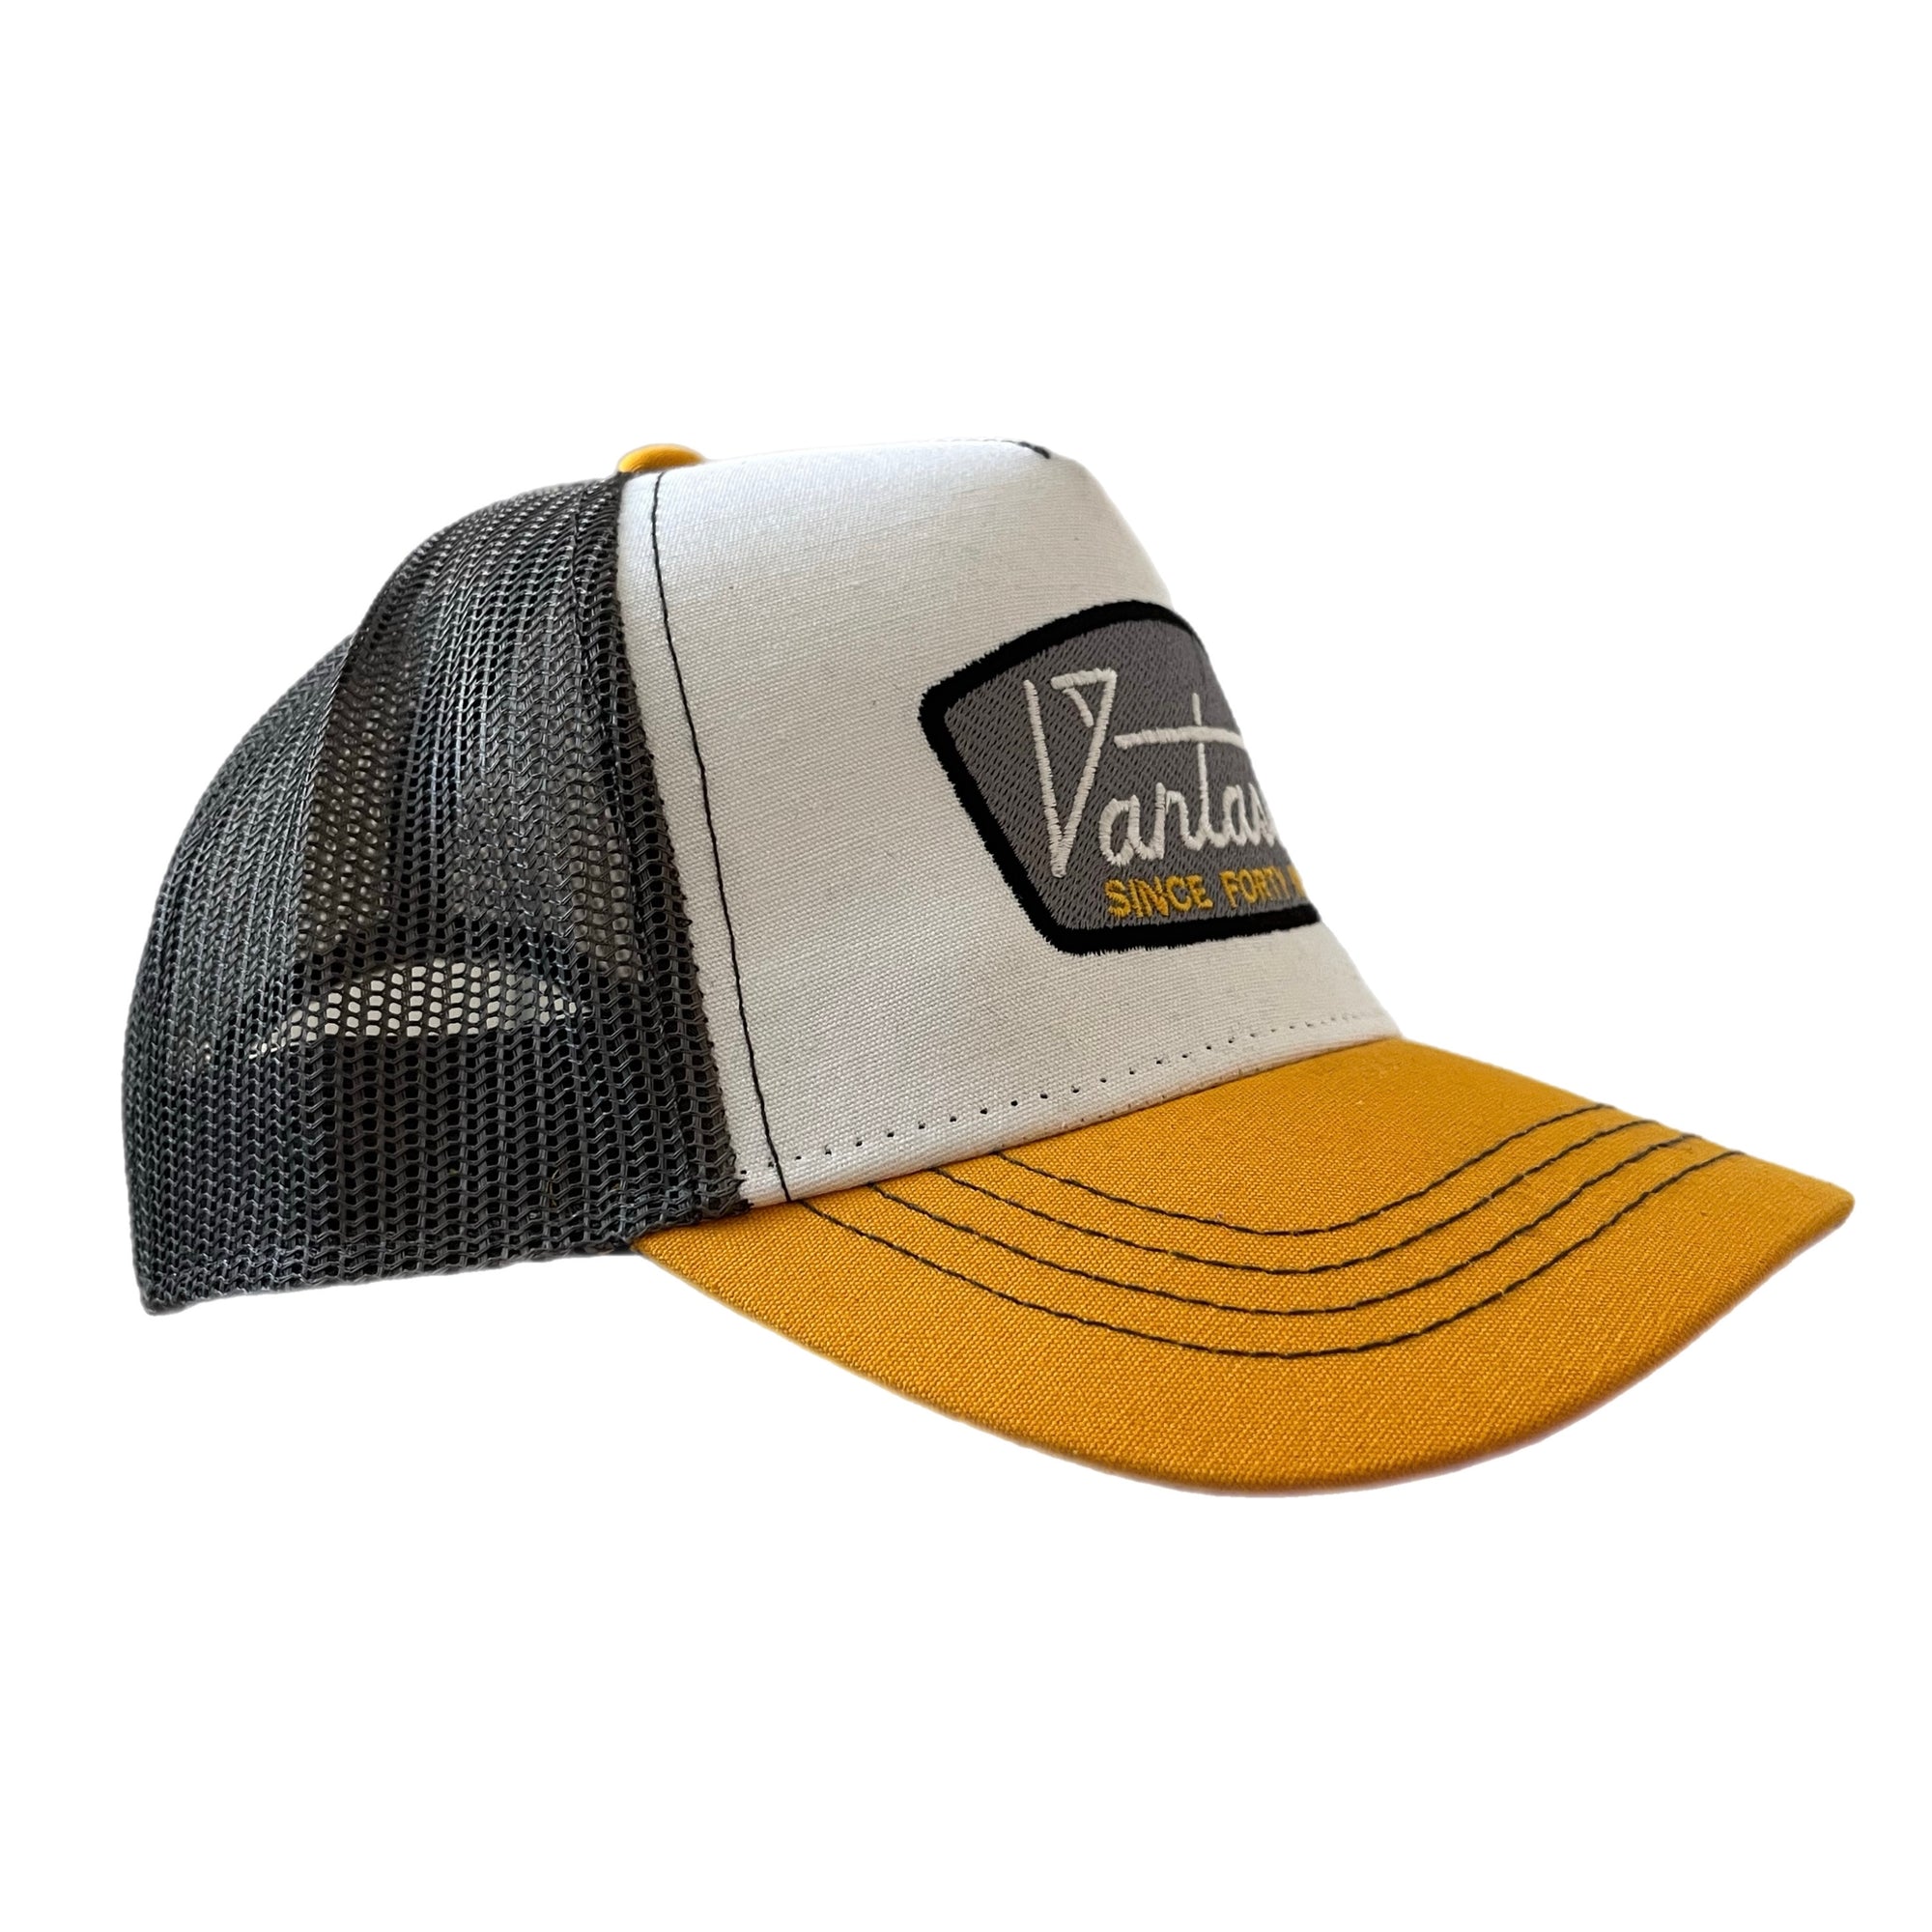 Deluxe trucker cap - yellow/white/charcoal